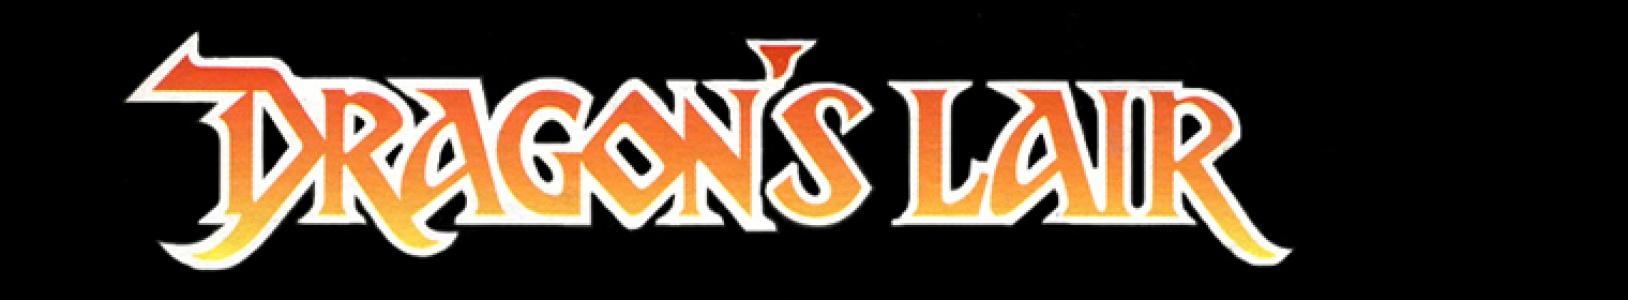 Dragon's Lair banner